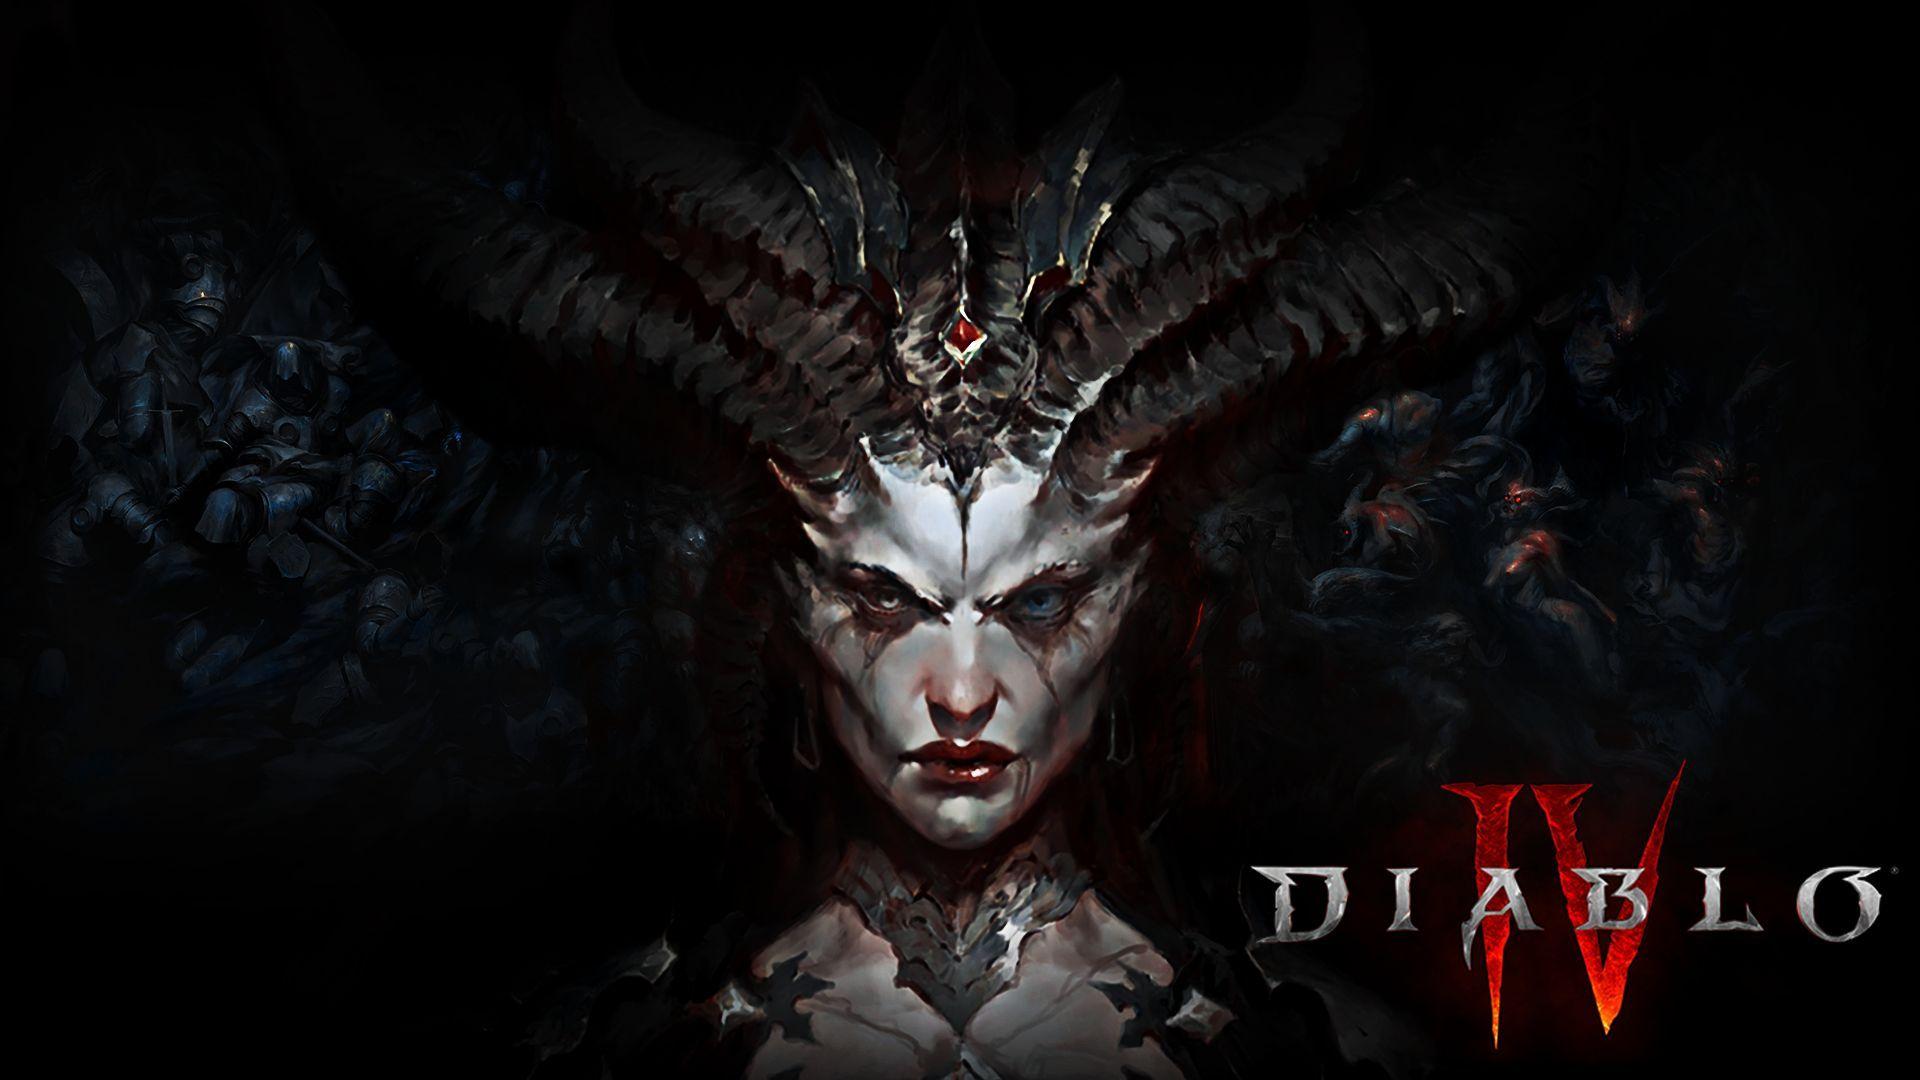 Diablo 4 UltraWide 219 wallpapers or desktop backgrounds